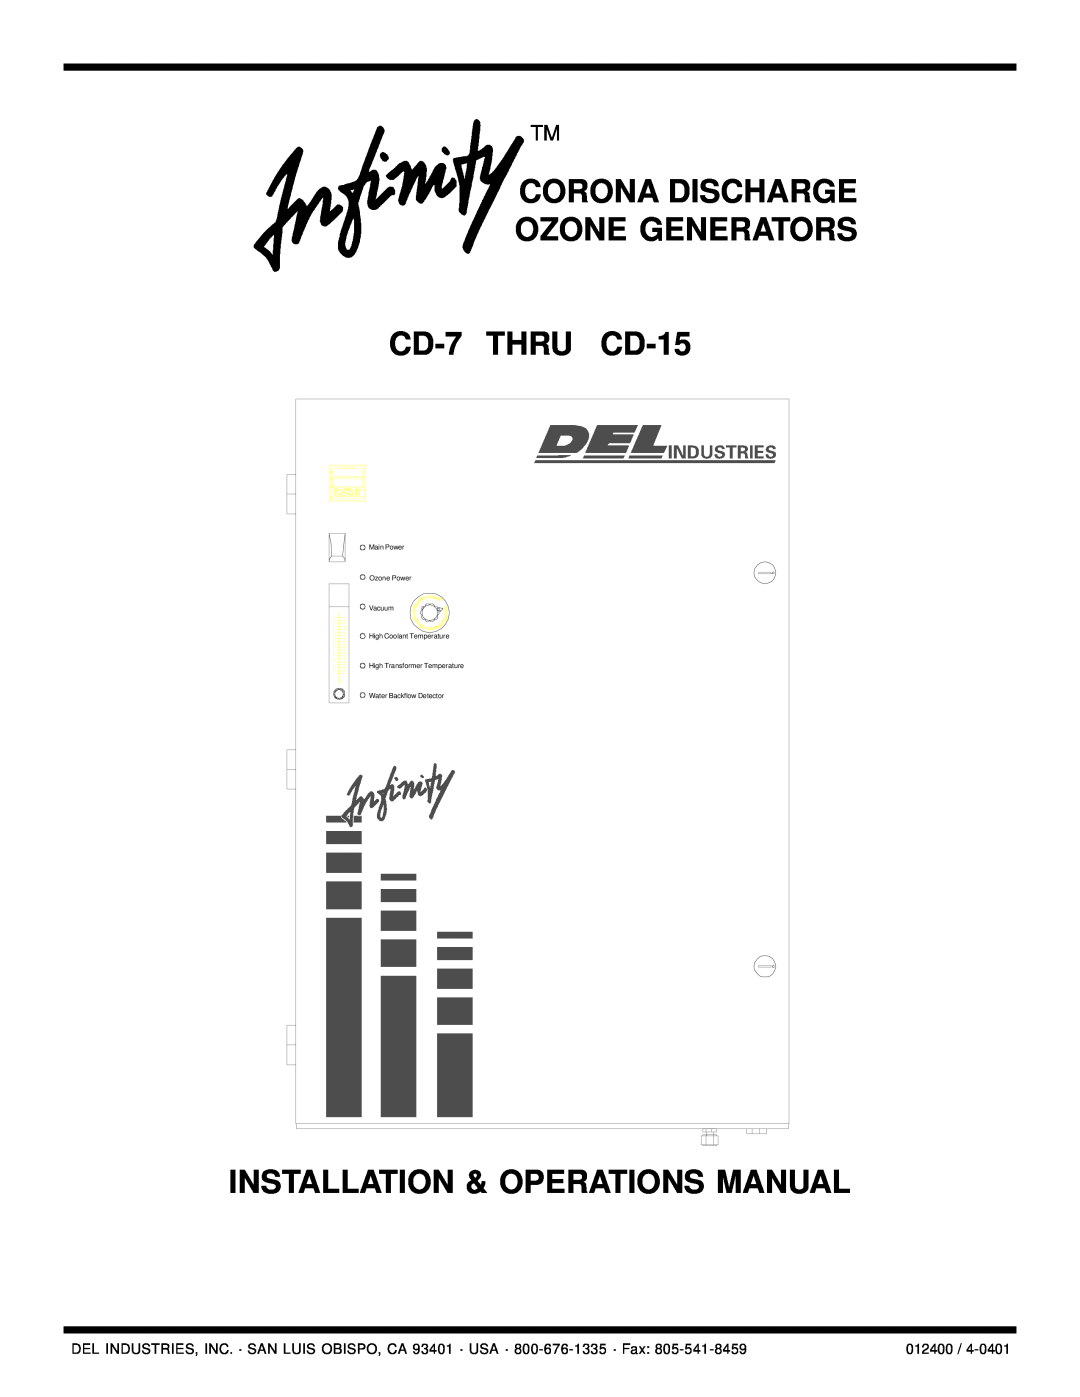 Infinity CD-7 THRU CD-15 manual CORONA DISCHARGE OZONE GENERATORS CD-7THRU CD-15, Installation & Operations Manual, 012400 